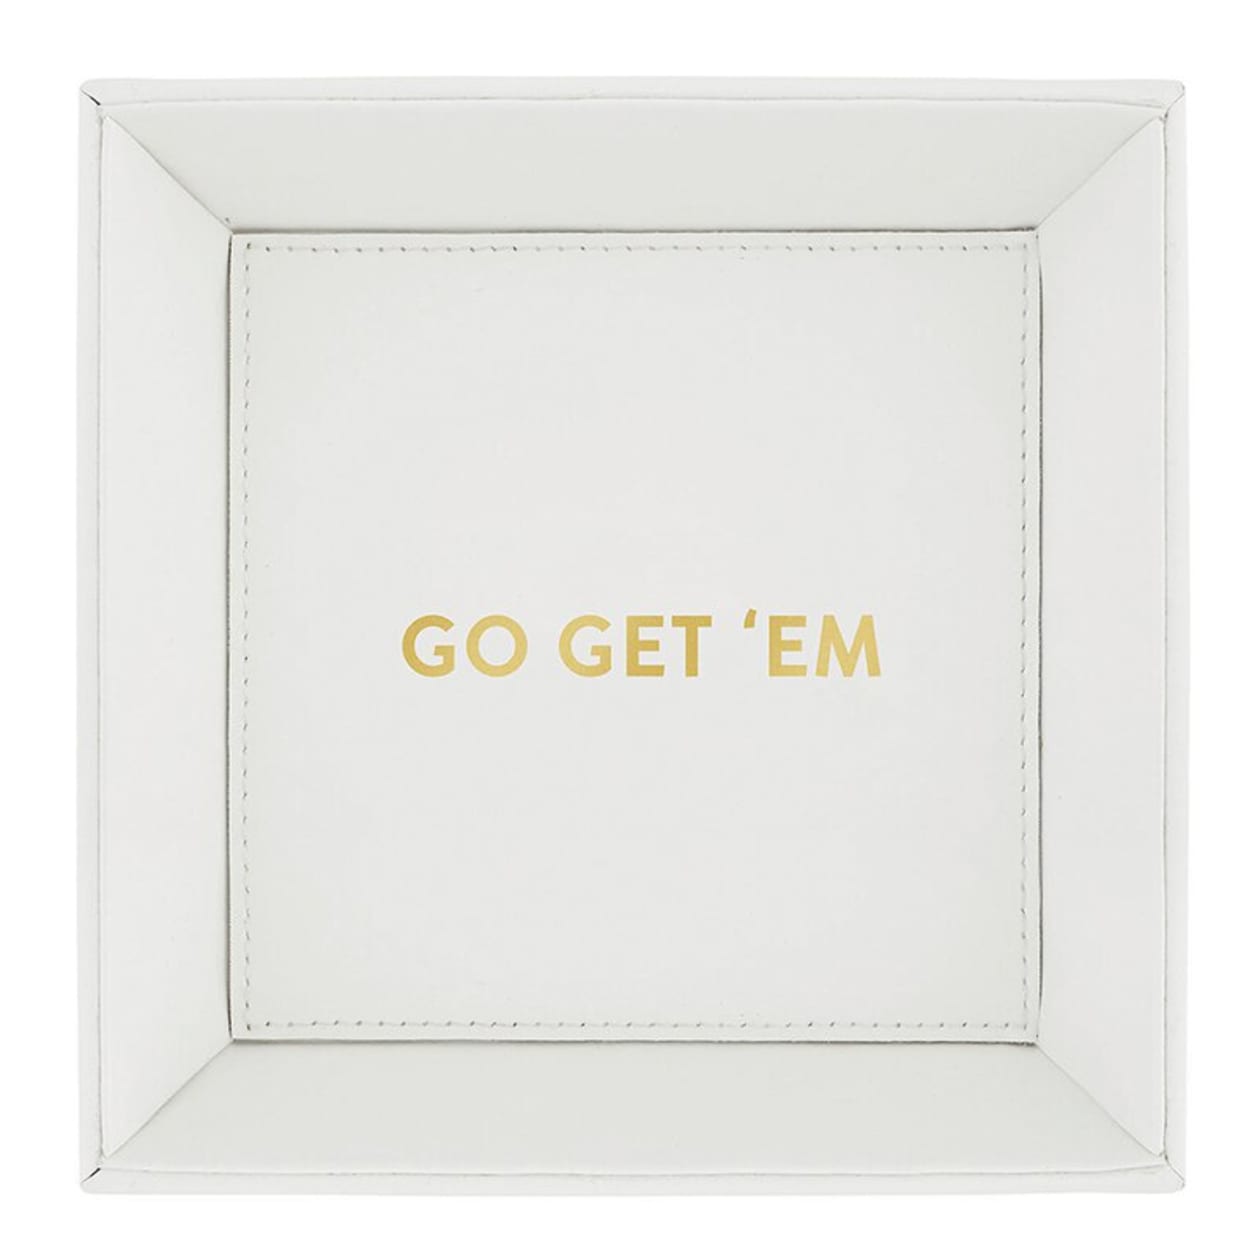 Go Get 'Em White Valet Tray | Motivational Gift Tray for Keeping Keys, Jewelry, Etc.